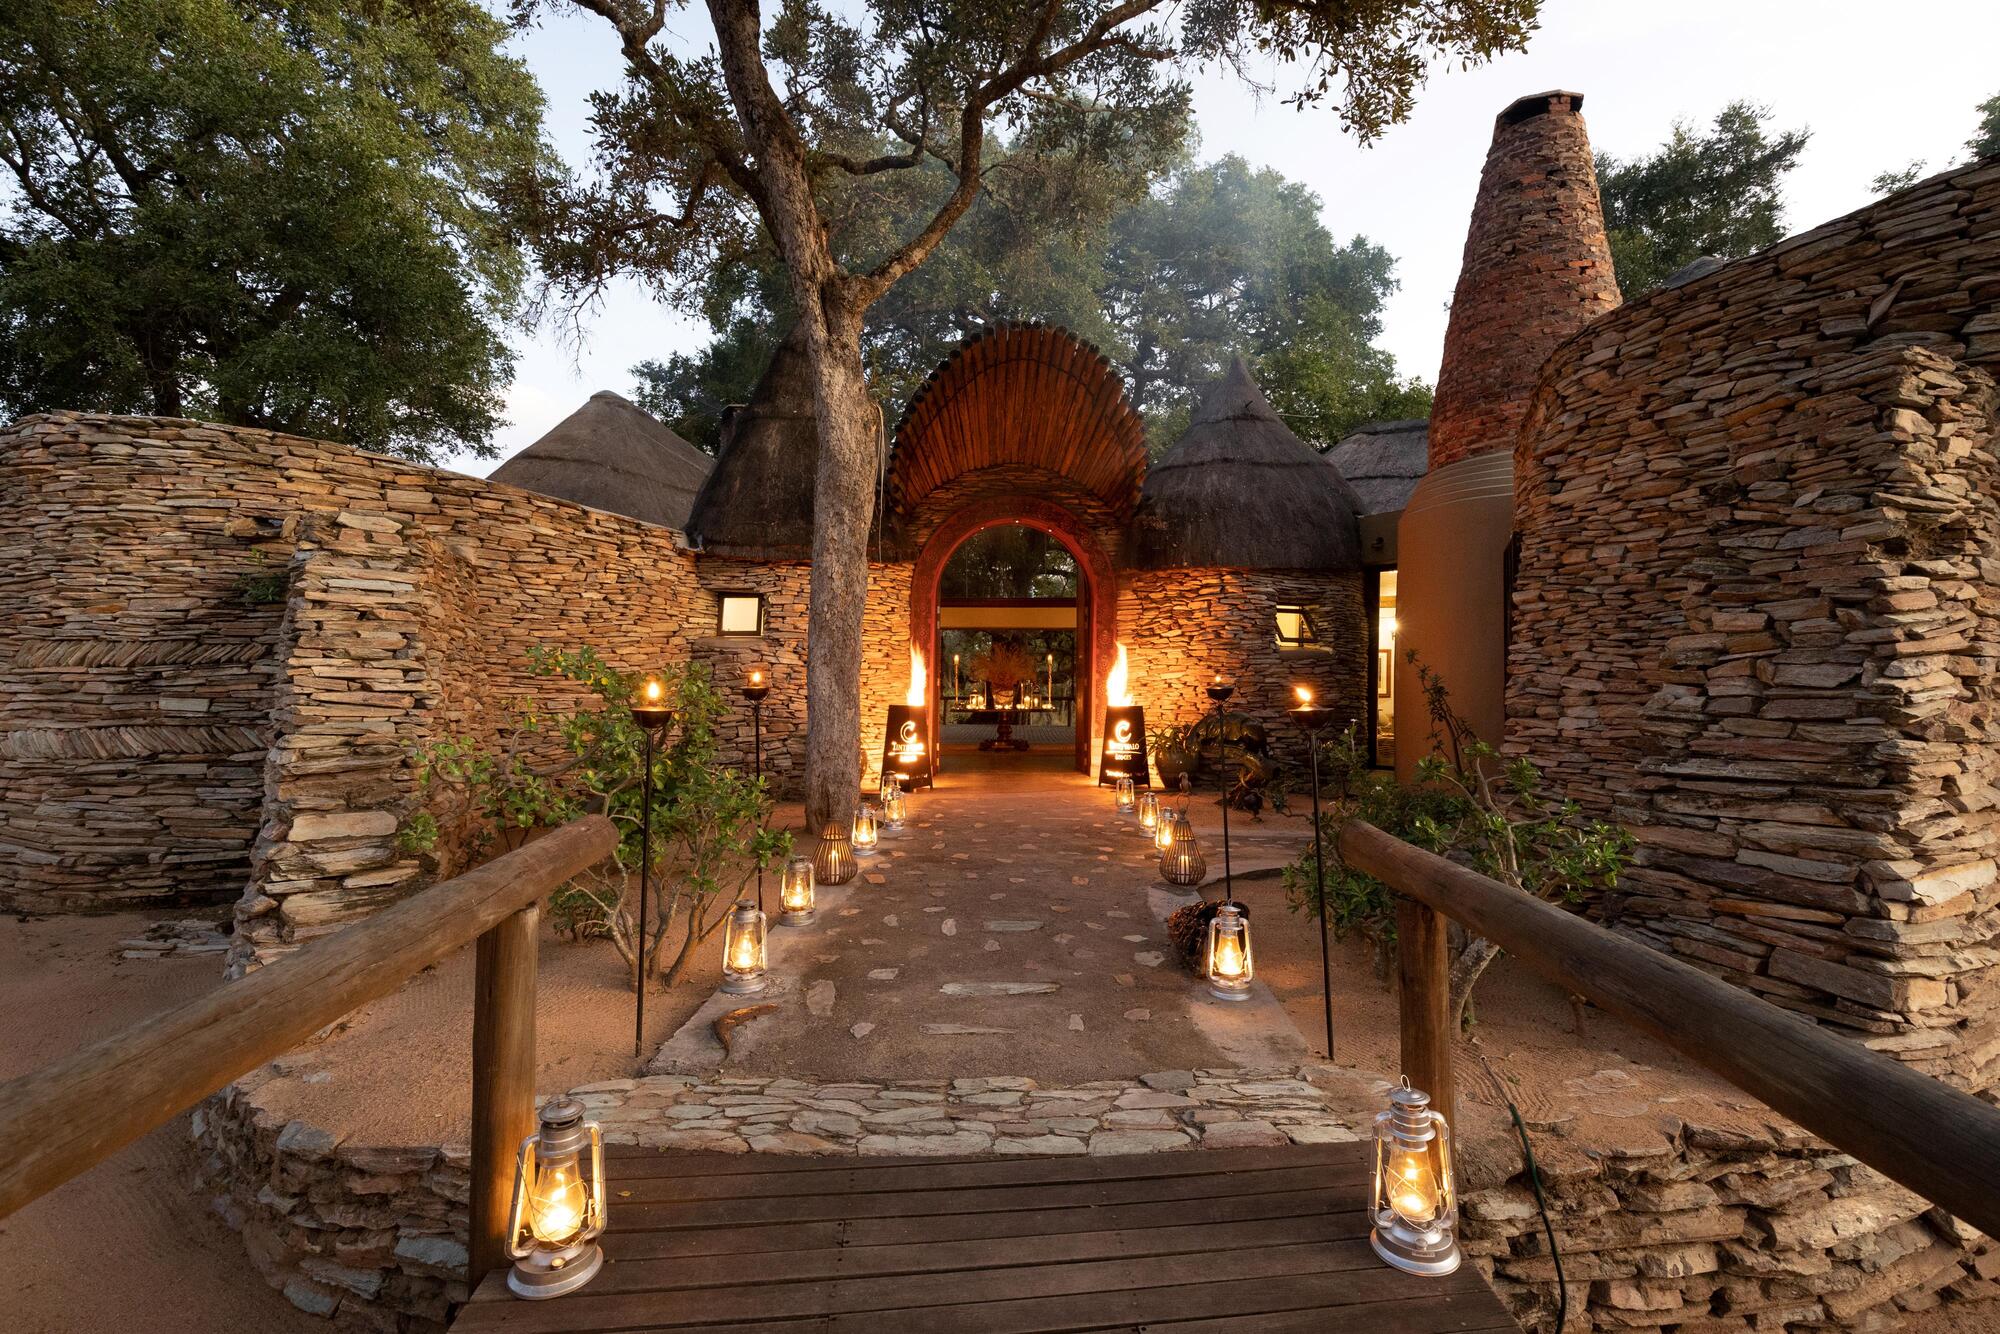 Tintswalo safari lodge